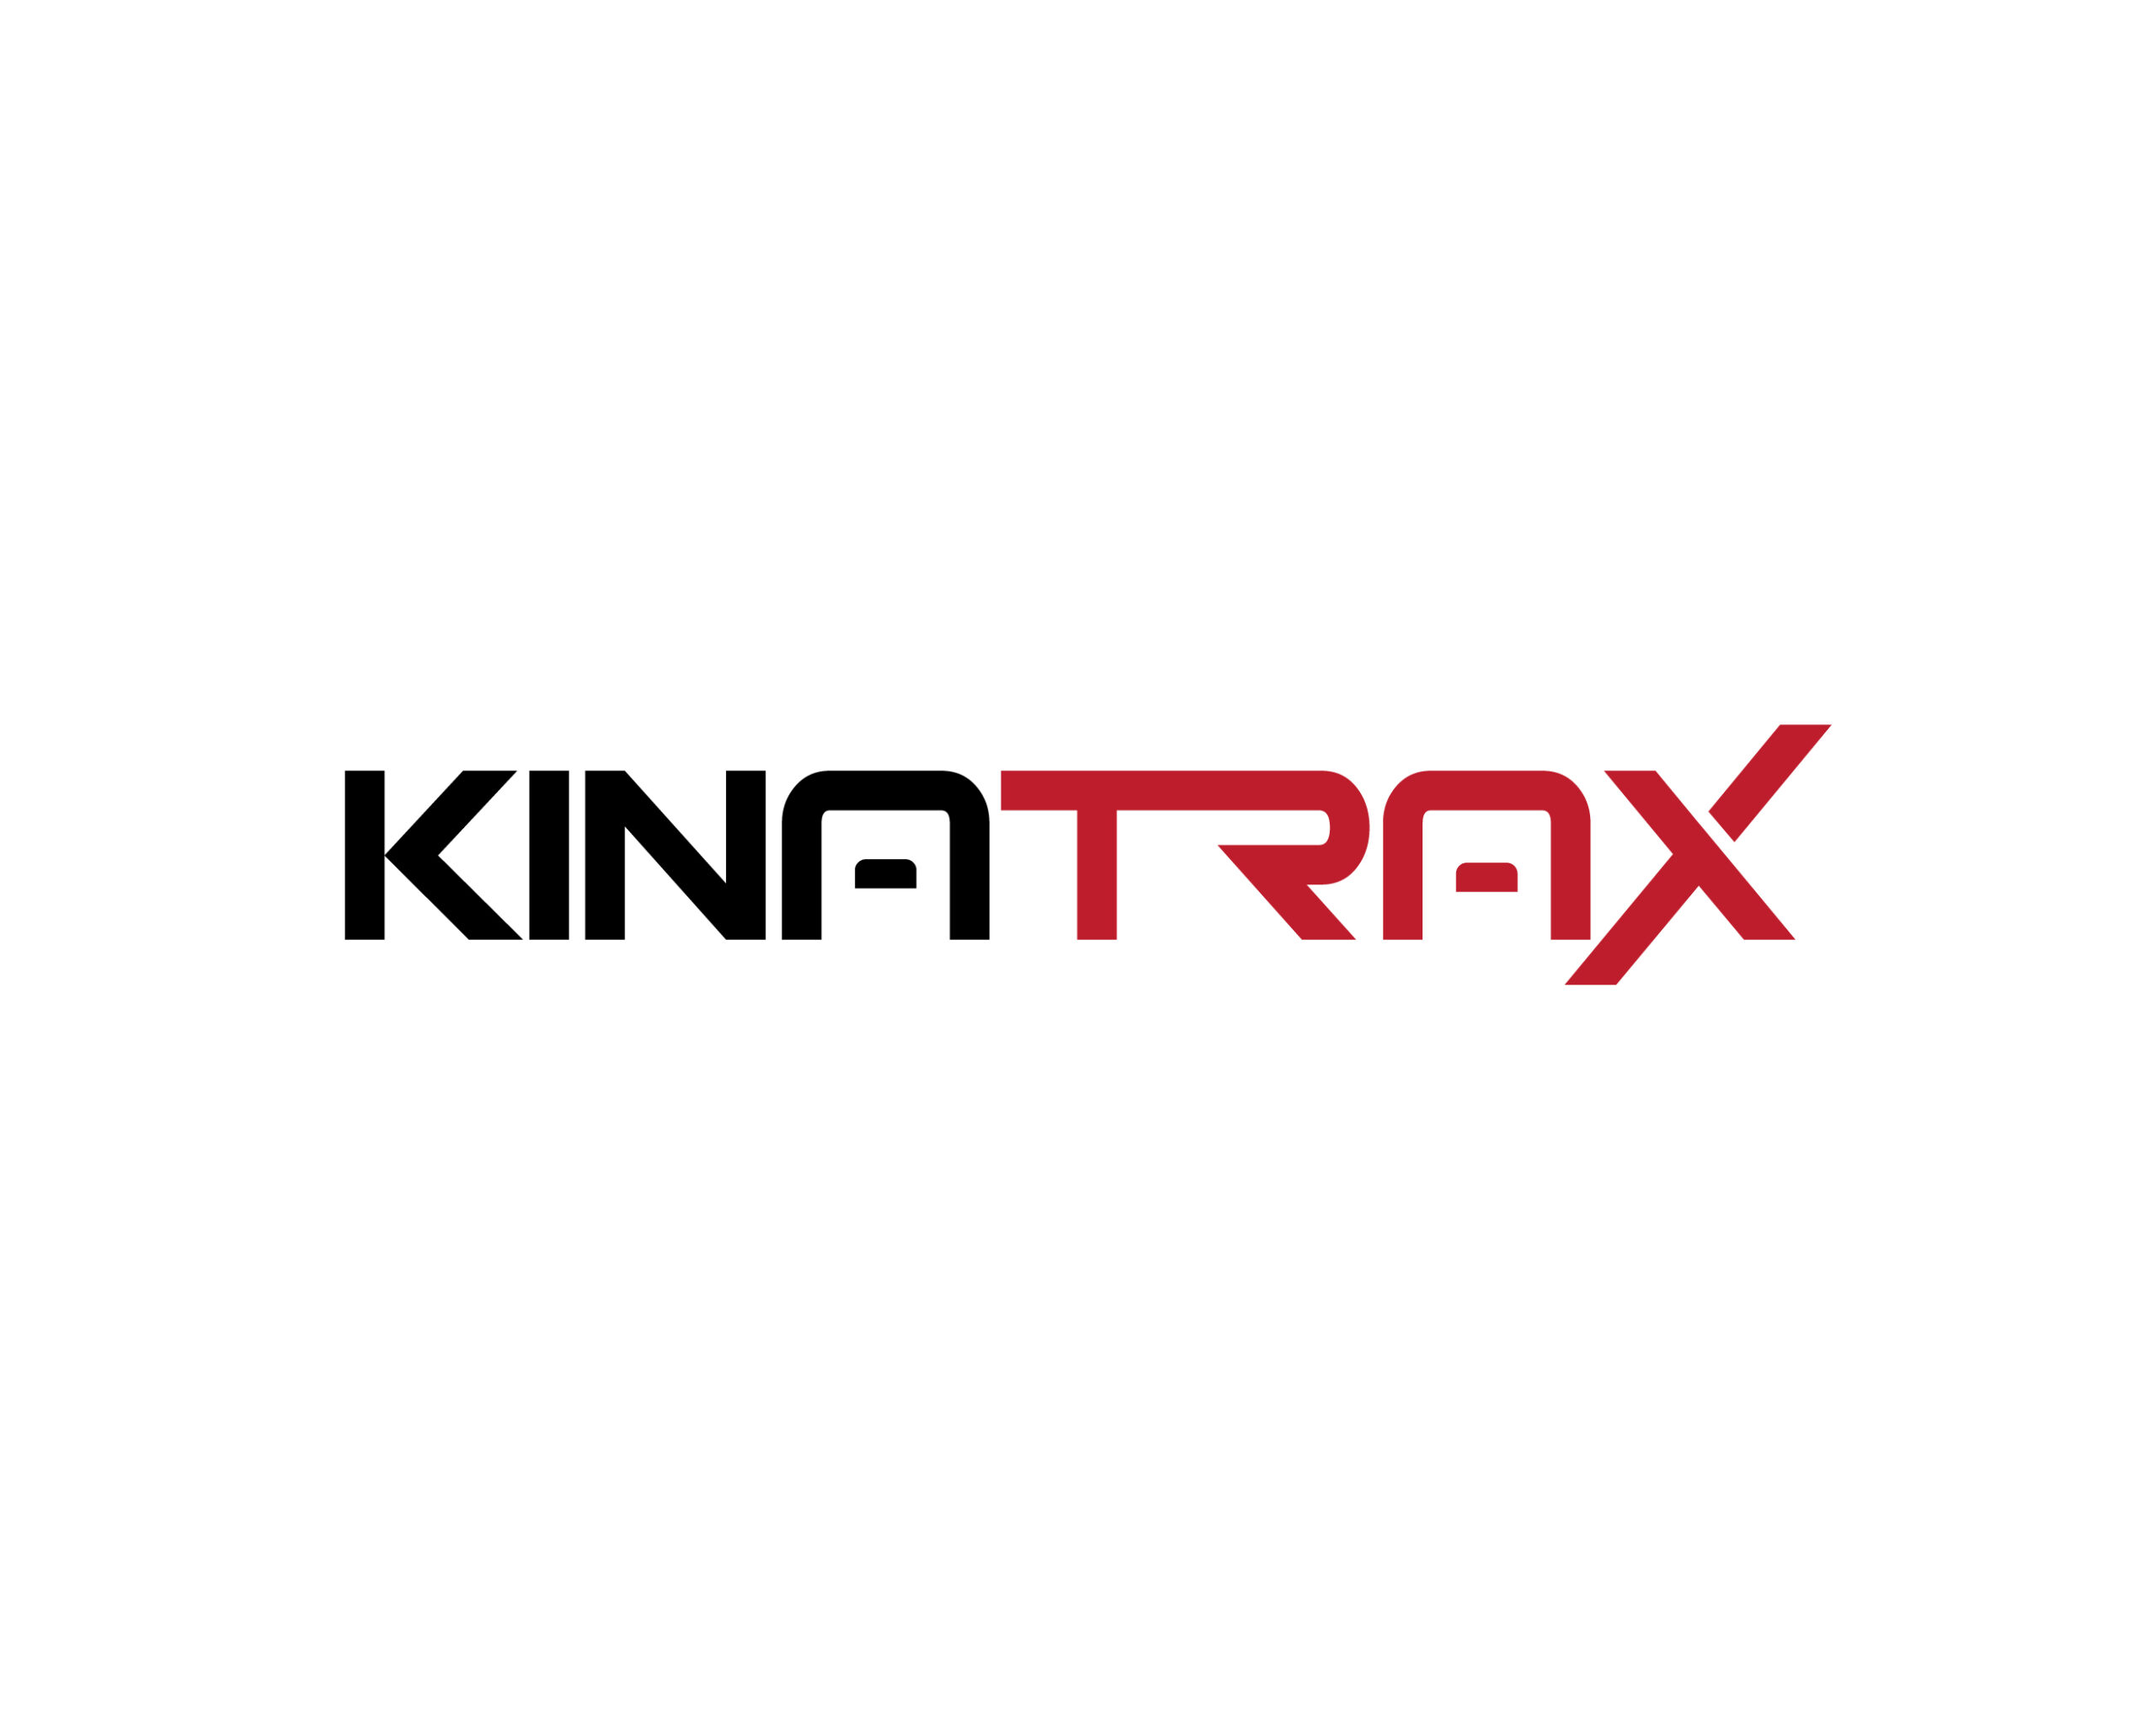 KinaTrax